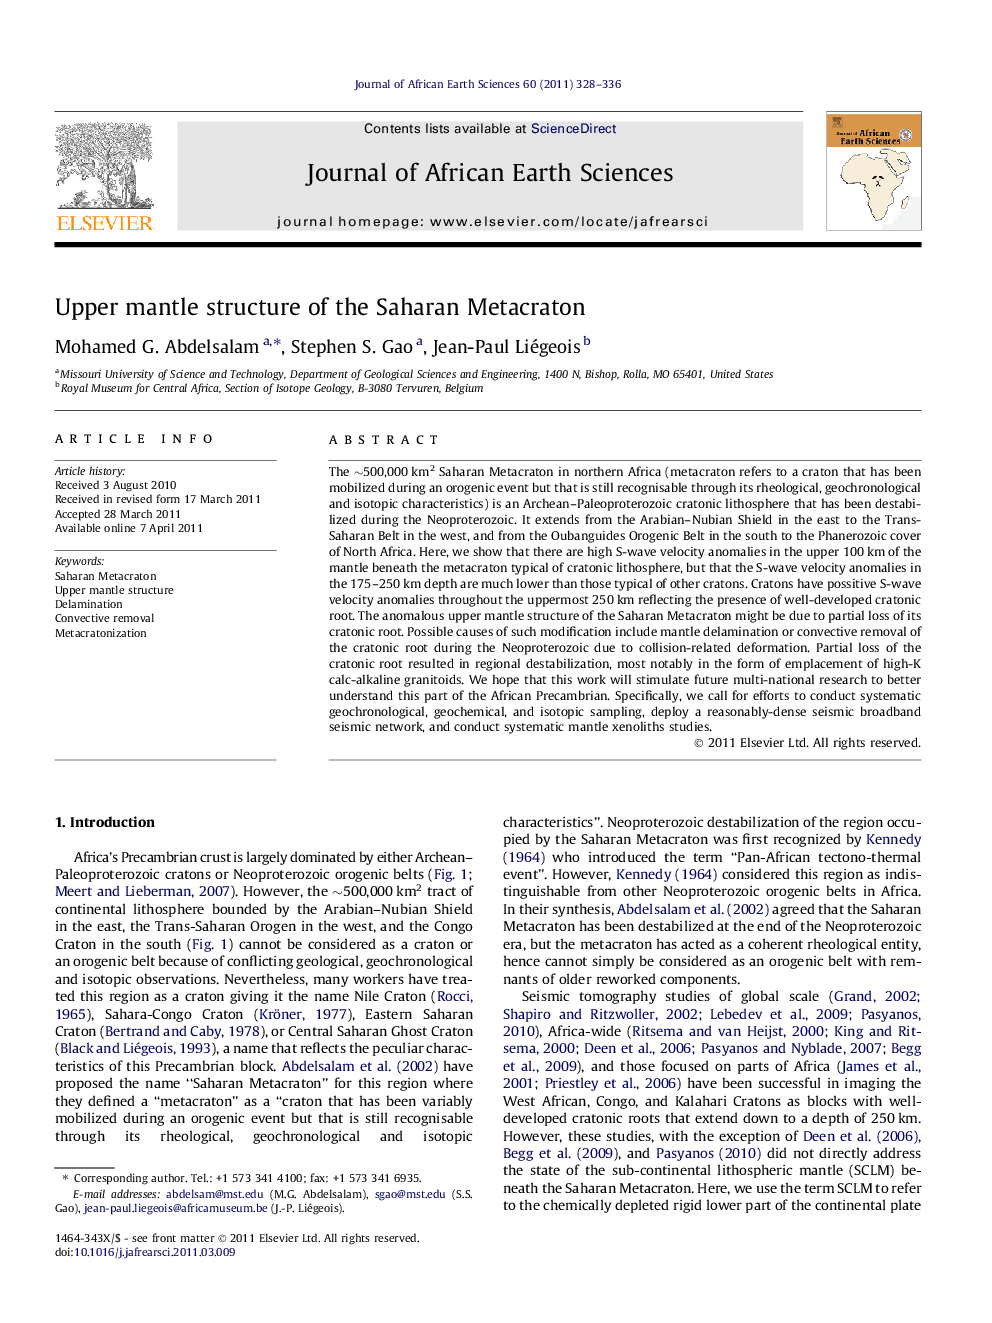 Upper mantle structure of the Saharan Metacraton